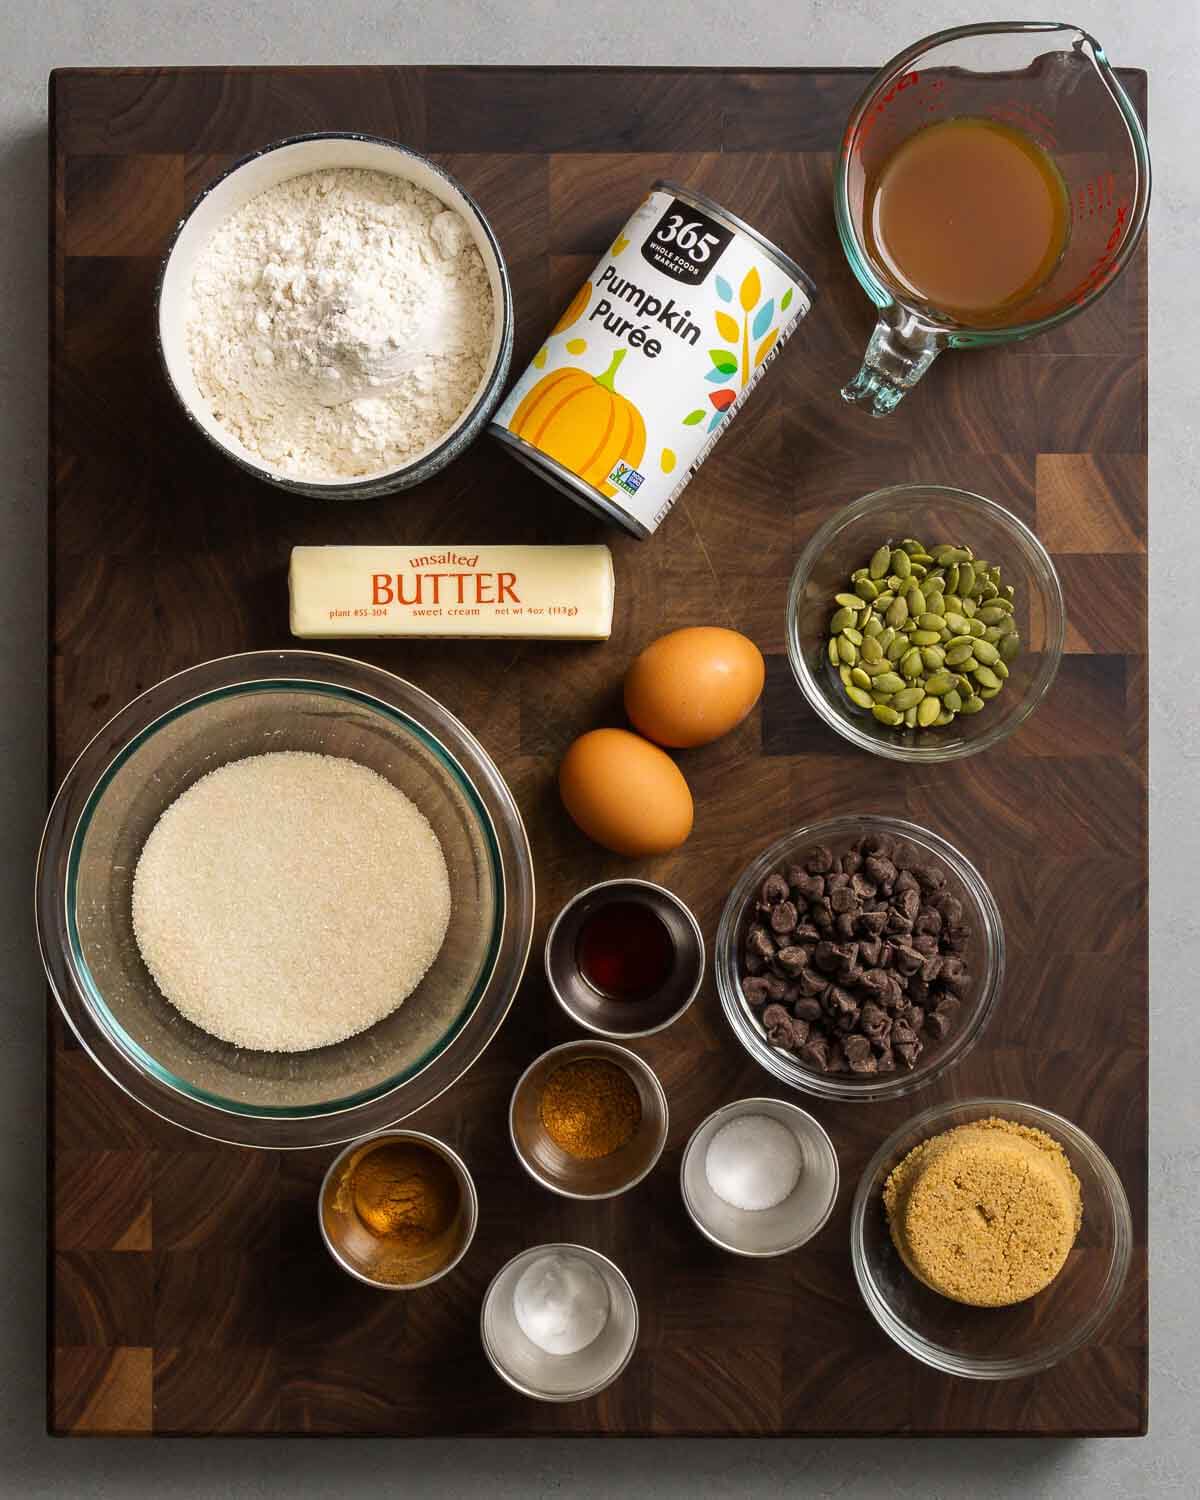 Ingredients shown: flour, pumpkin puree, apple cider, butter, eggs, pumpkin seeds, sugar, vanilla, cinnamon, baking soda, salt, brown sugar, and chocolate chips.